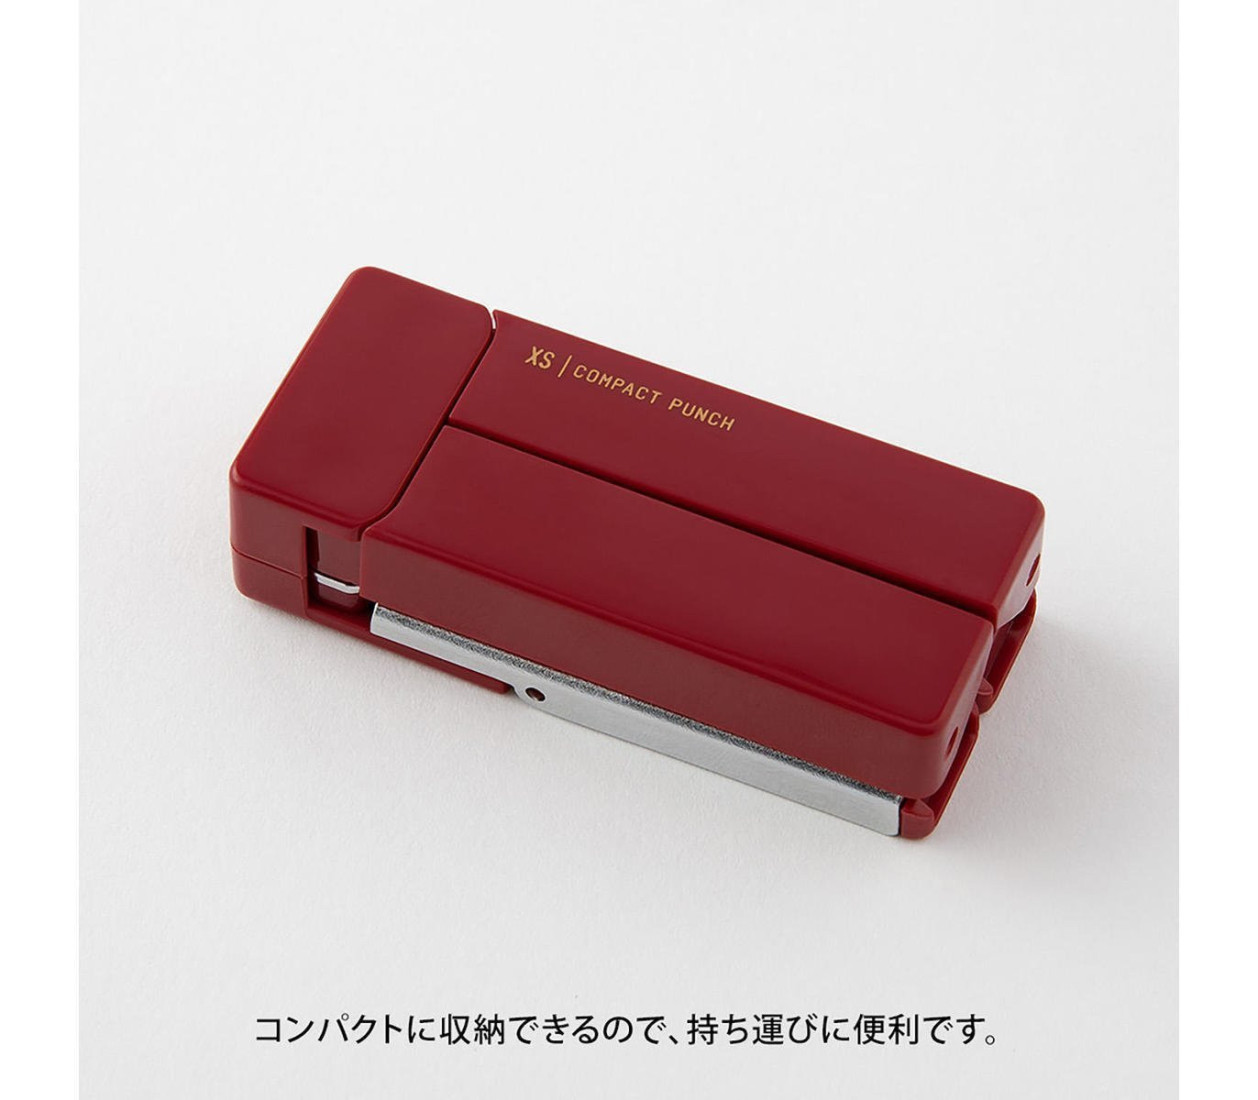 Midori XS (extra small) Compact Punch Dark Red 35546006